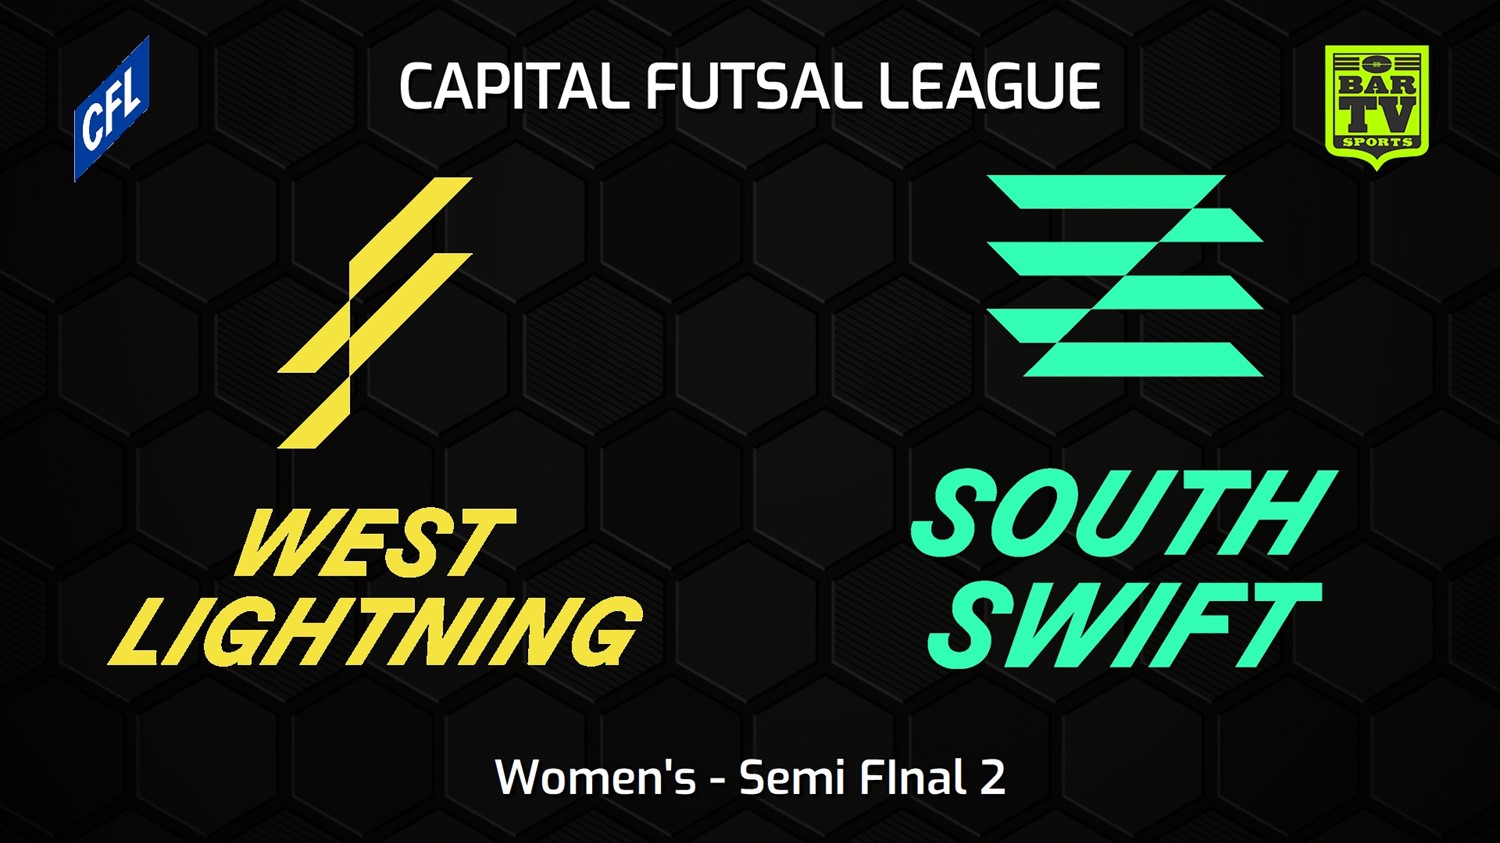 230210-Capital Football Futsal Semi FInal 2 - Women's - West Canberra Lightning v South Canberra Swift Minigame Slate Image